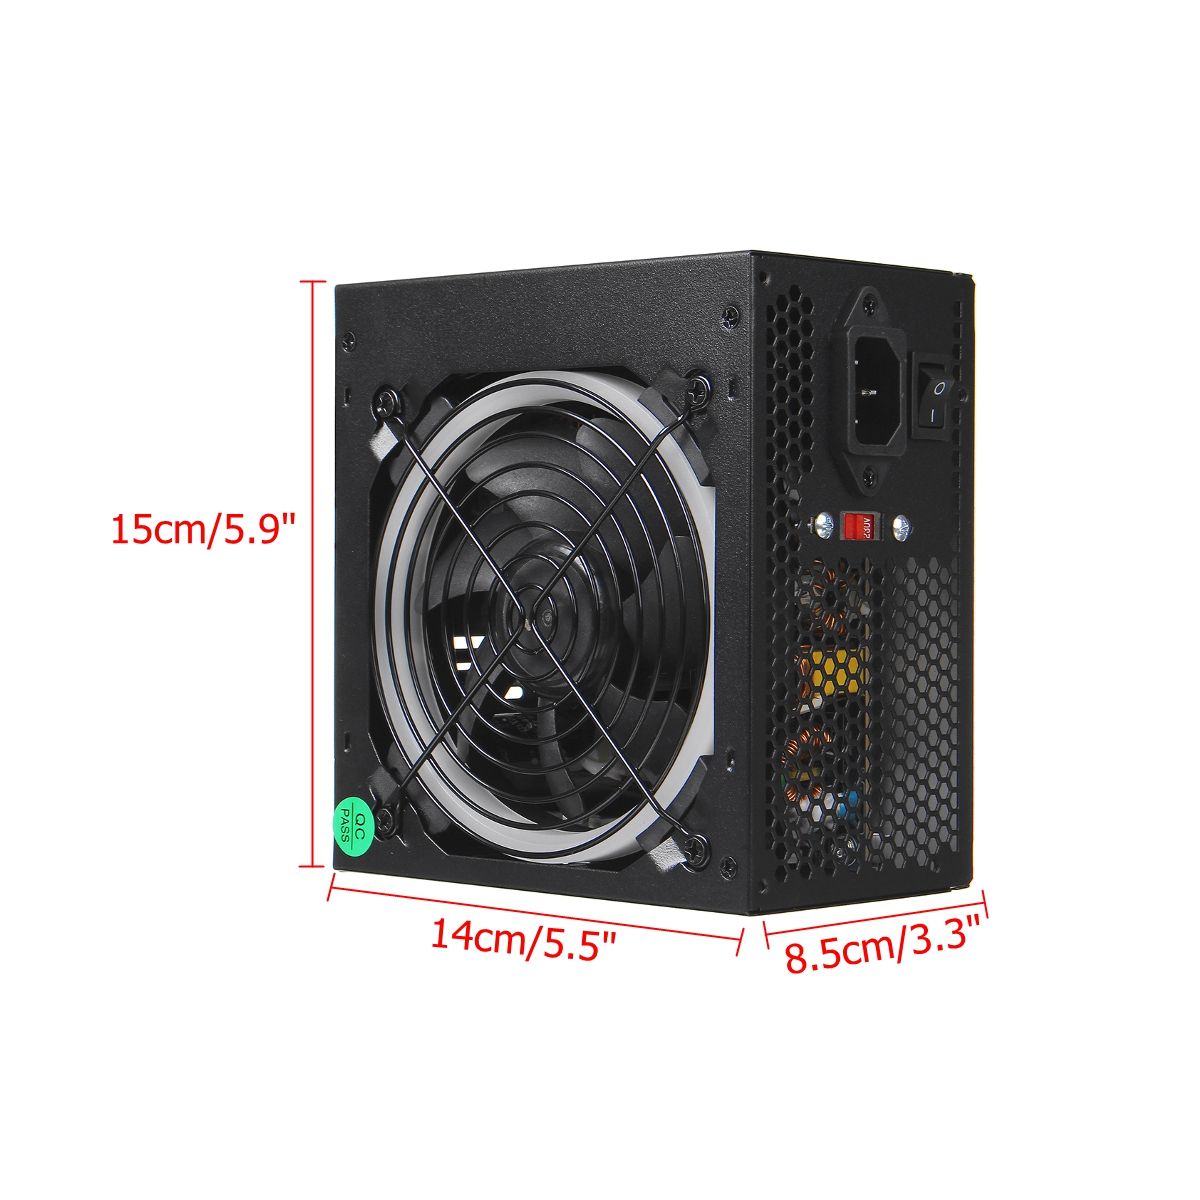 700W-PC-Power-Supply-Computer-Gaming-24-Pin-PCI-ATX-SATA-LED-Cooling-Fan-1673341